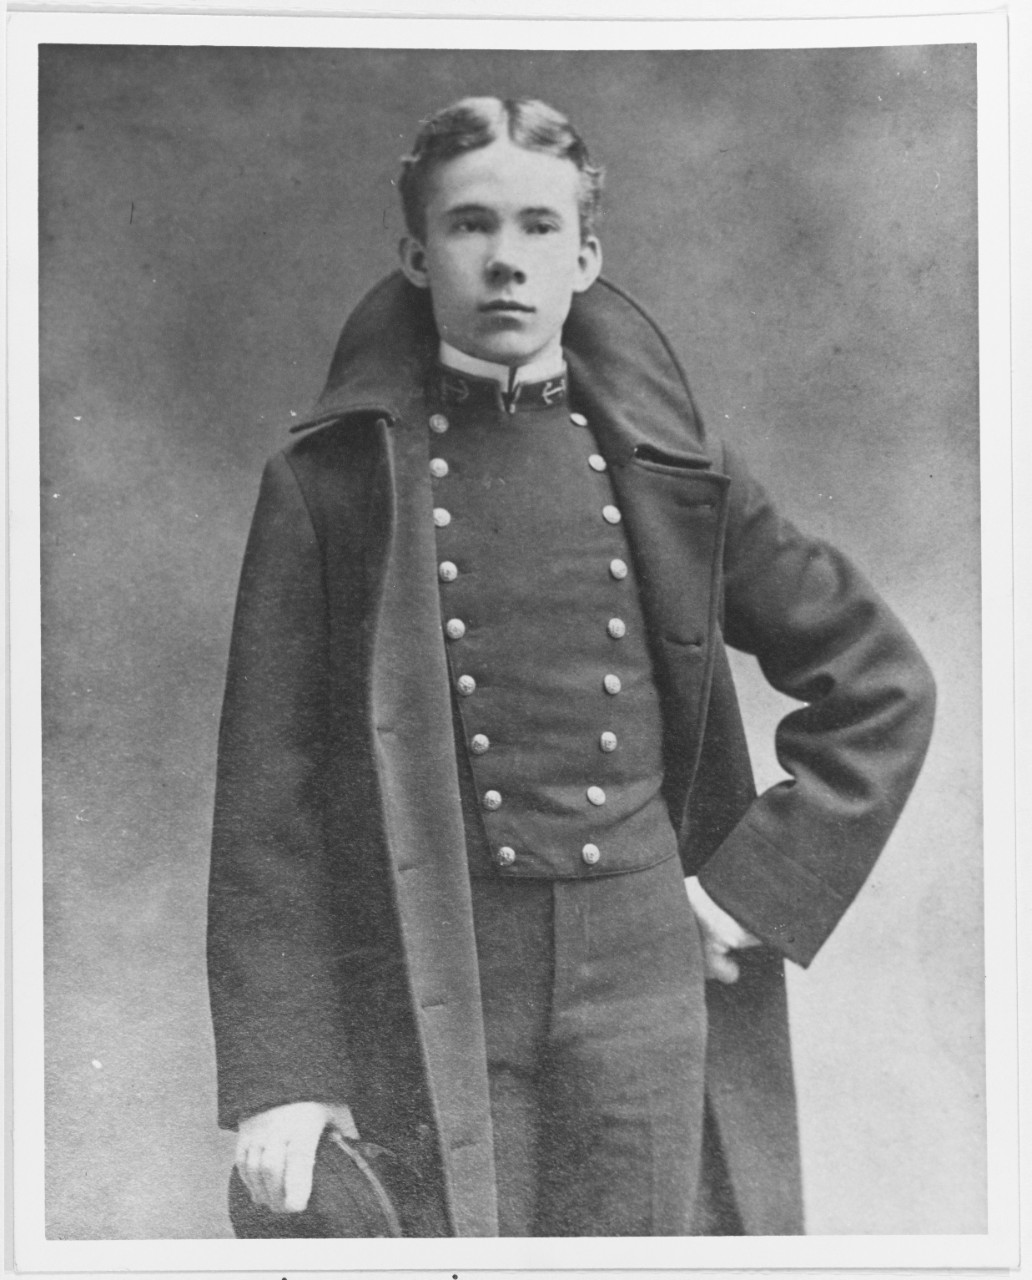 John Houseal Furse (1880-1907), Midshipman, U.S. Navy